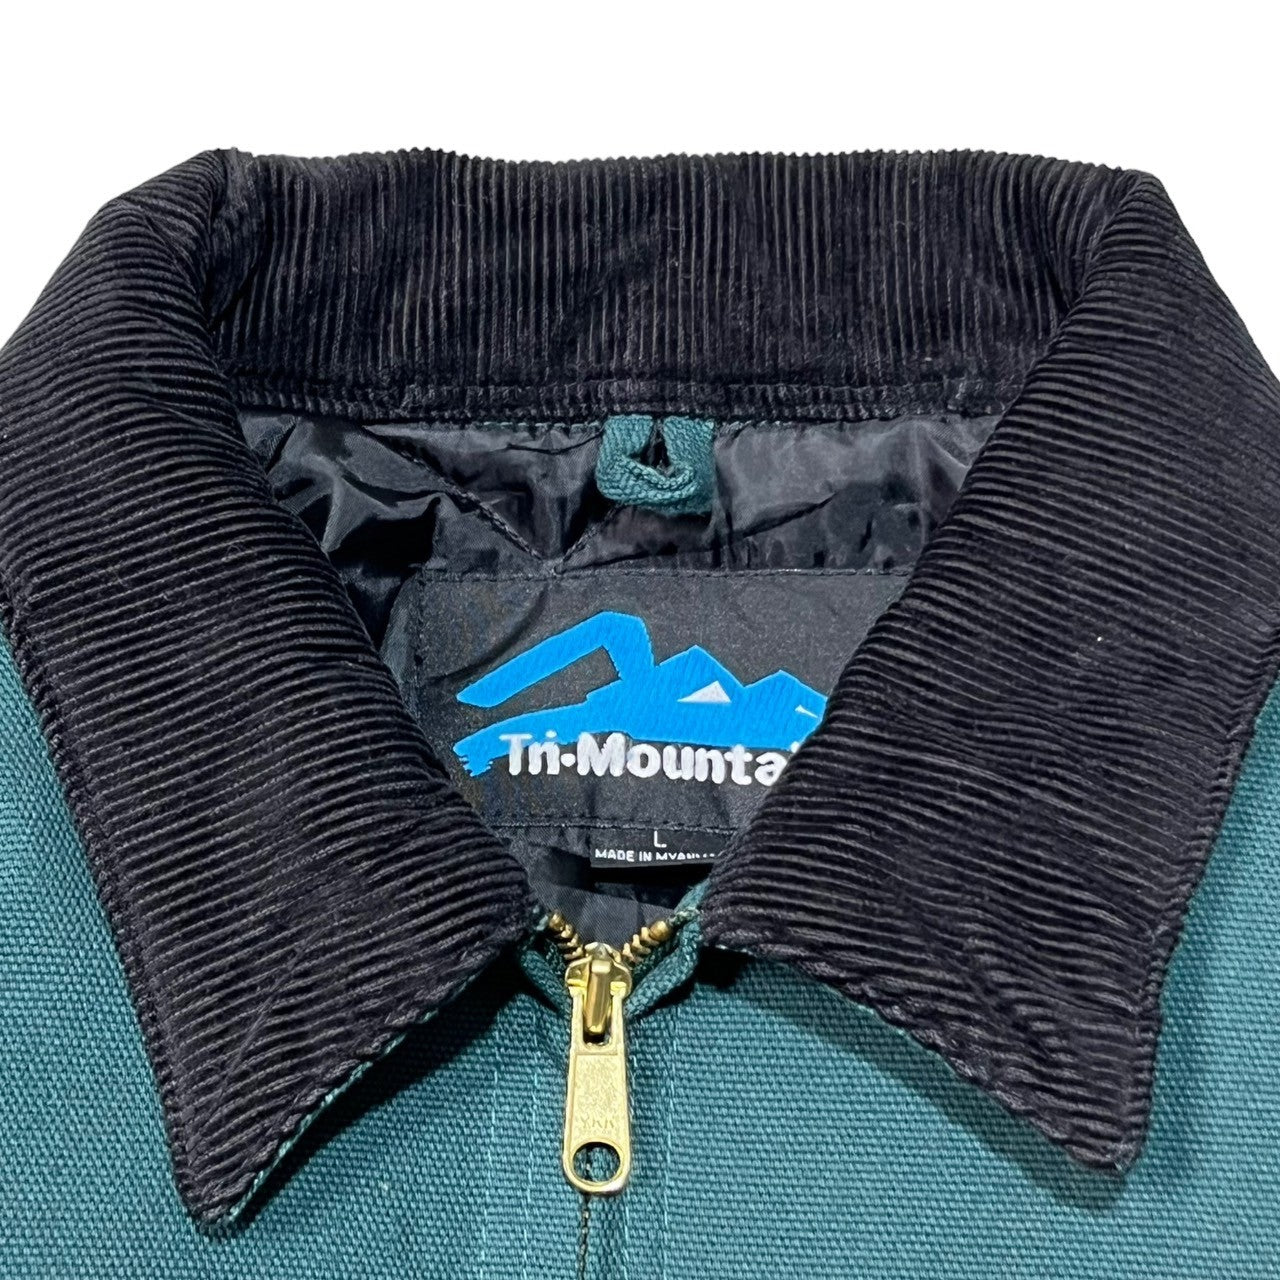 Tn-Mountain(ティーエヌマウンテン) 90's Duck fabric work jacket 